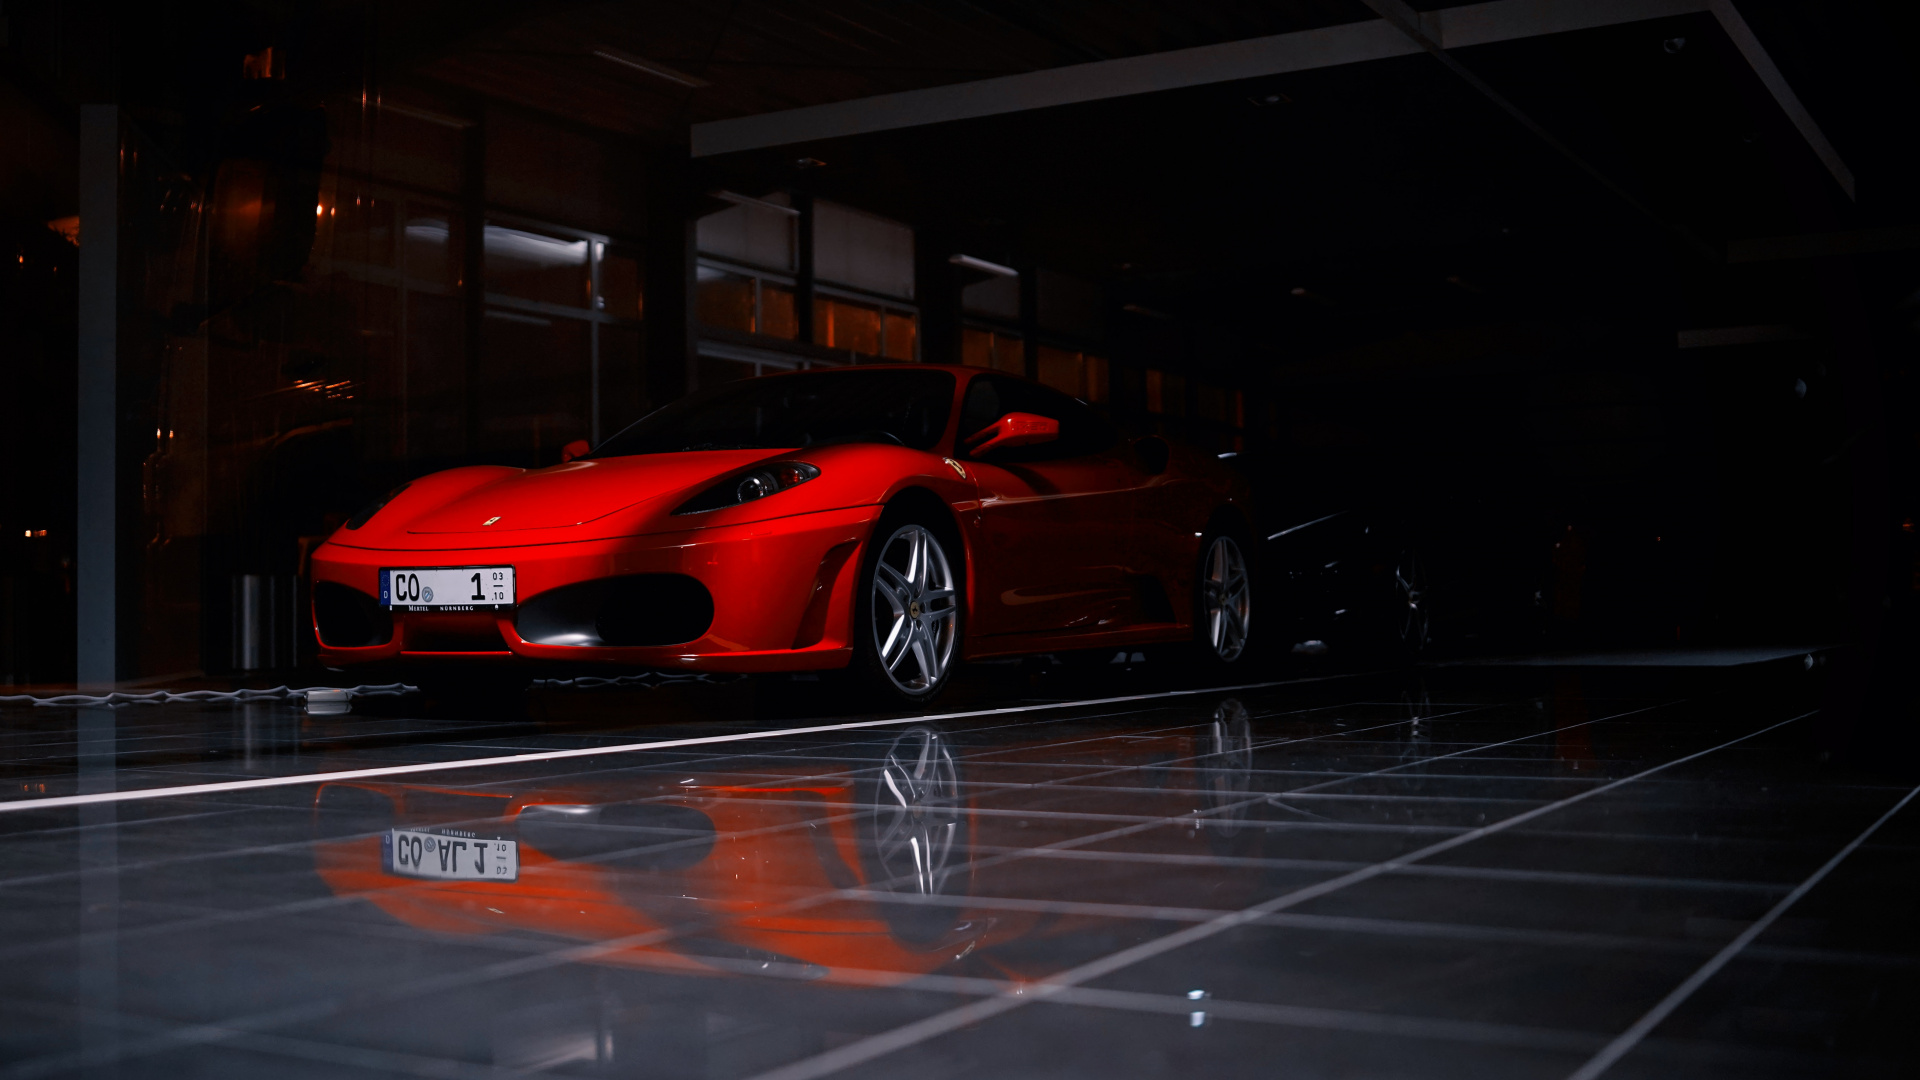 Red Ferrari 458 Italia Parked on Parking Lot. Wallpaper in 1920x1080 Resolution